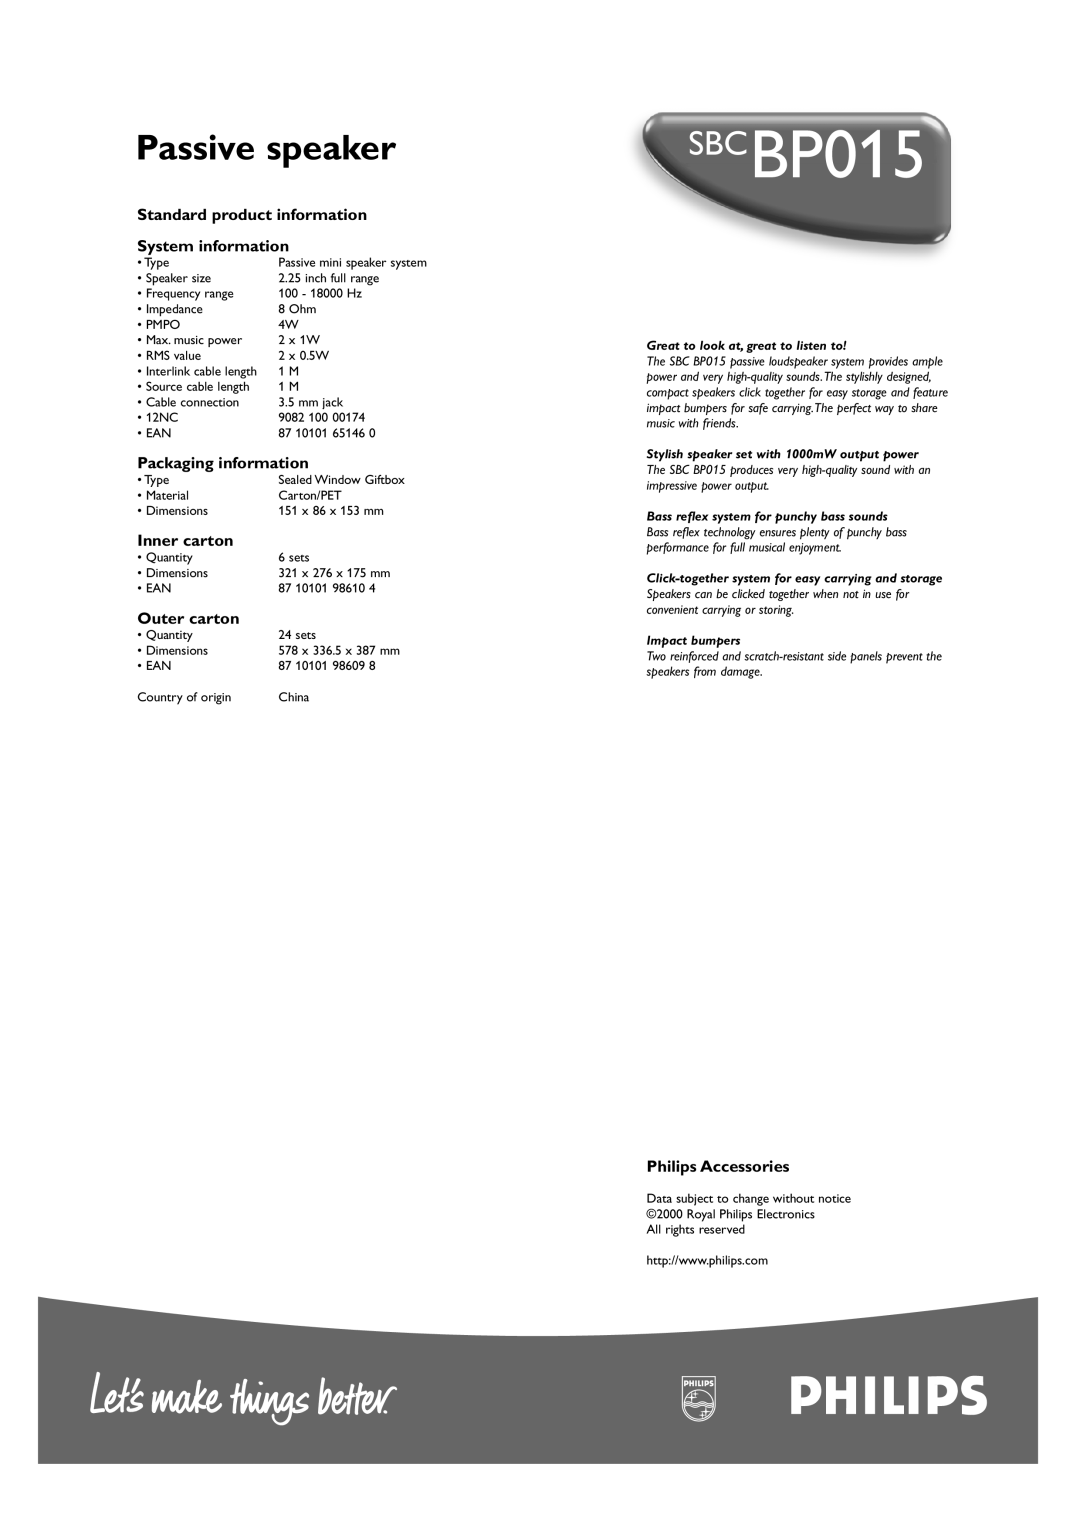 Philips SBC BP015 manual SBCBP015, Passive speaker, Standard product information System information, Packaging information 